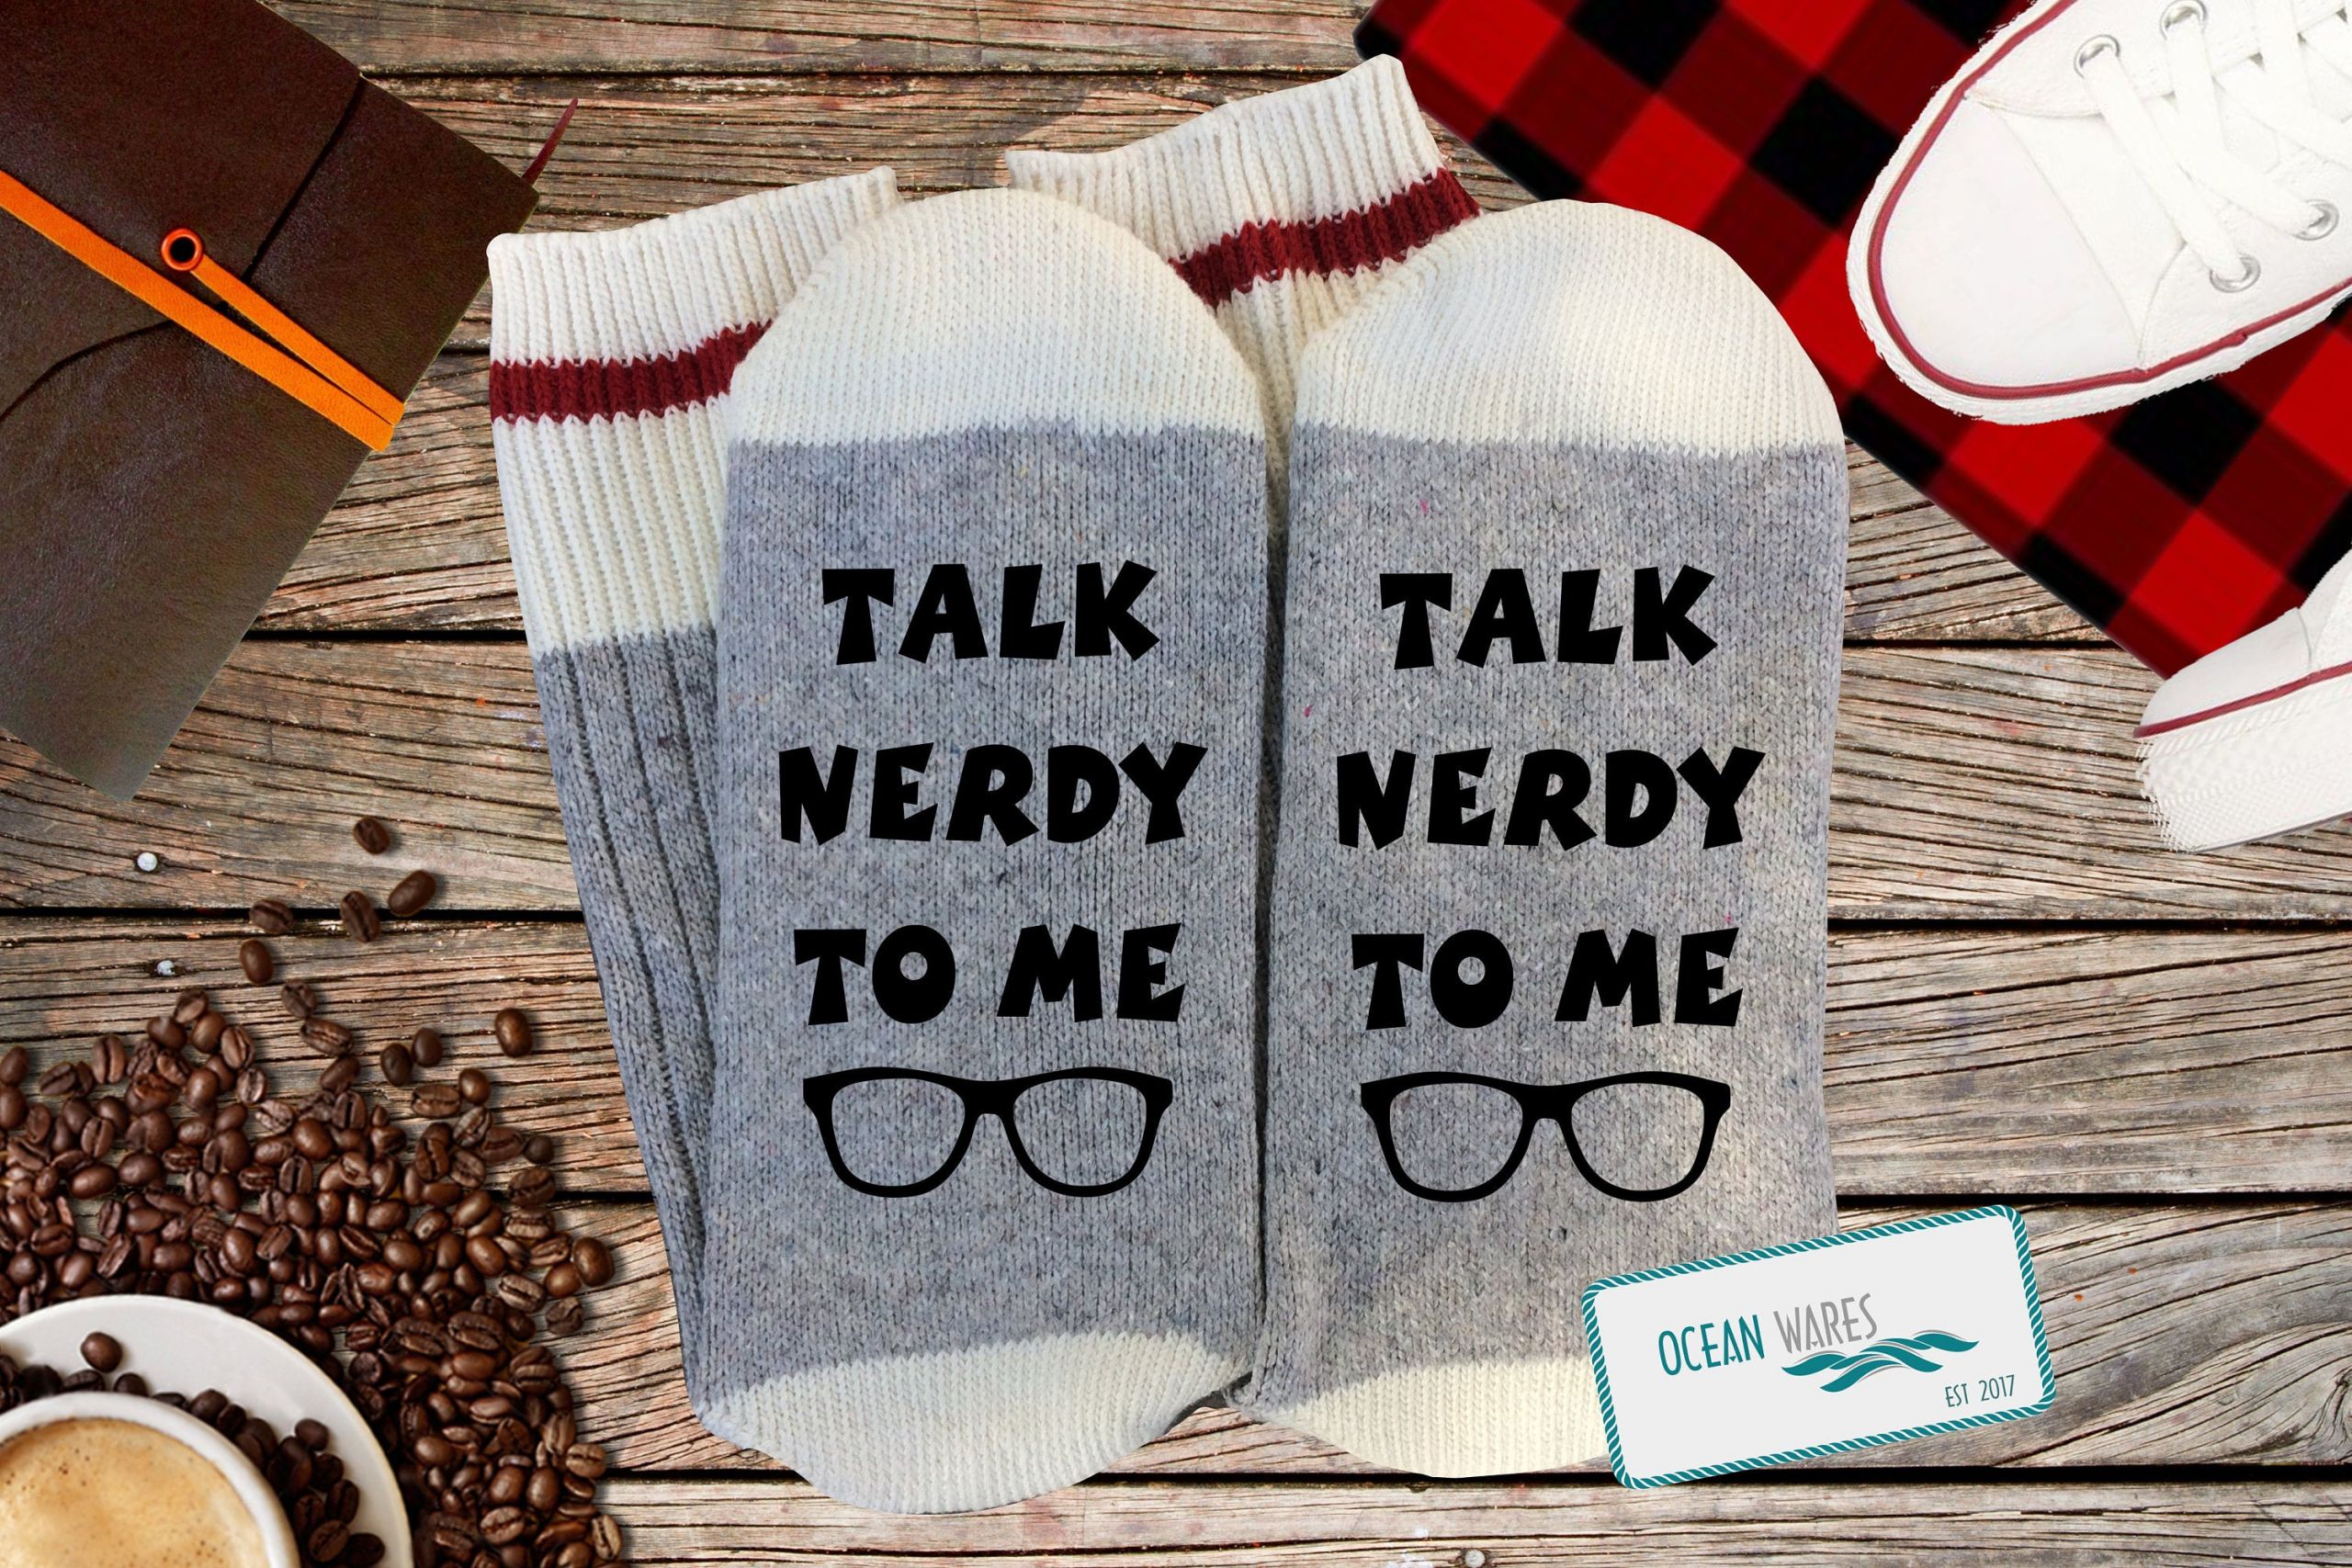 Nerd Gift Ideas For Boyfriend
 Nerd t talk nerdy to me book nerd nerd glasses